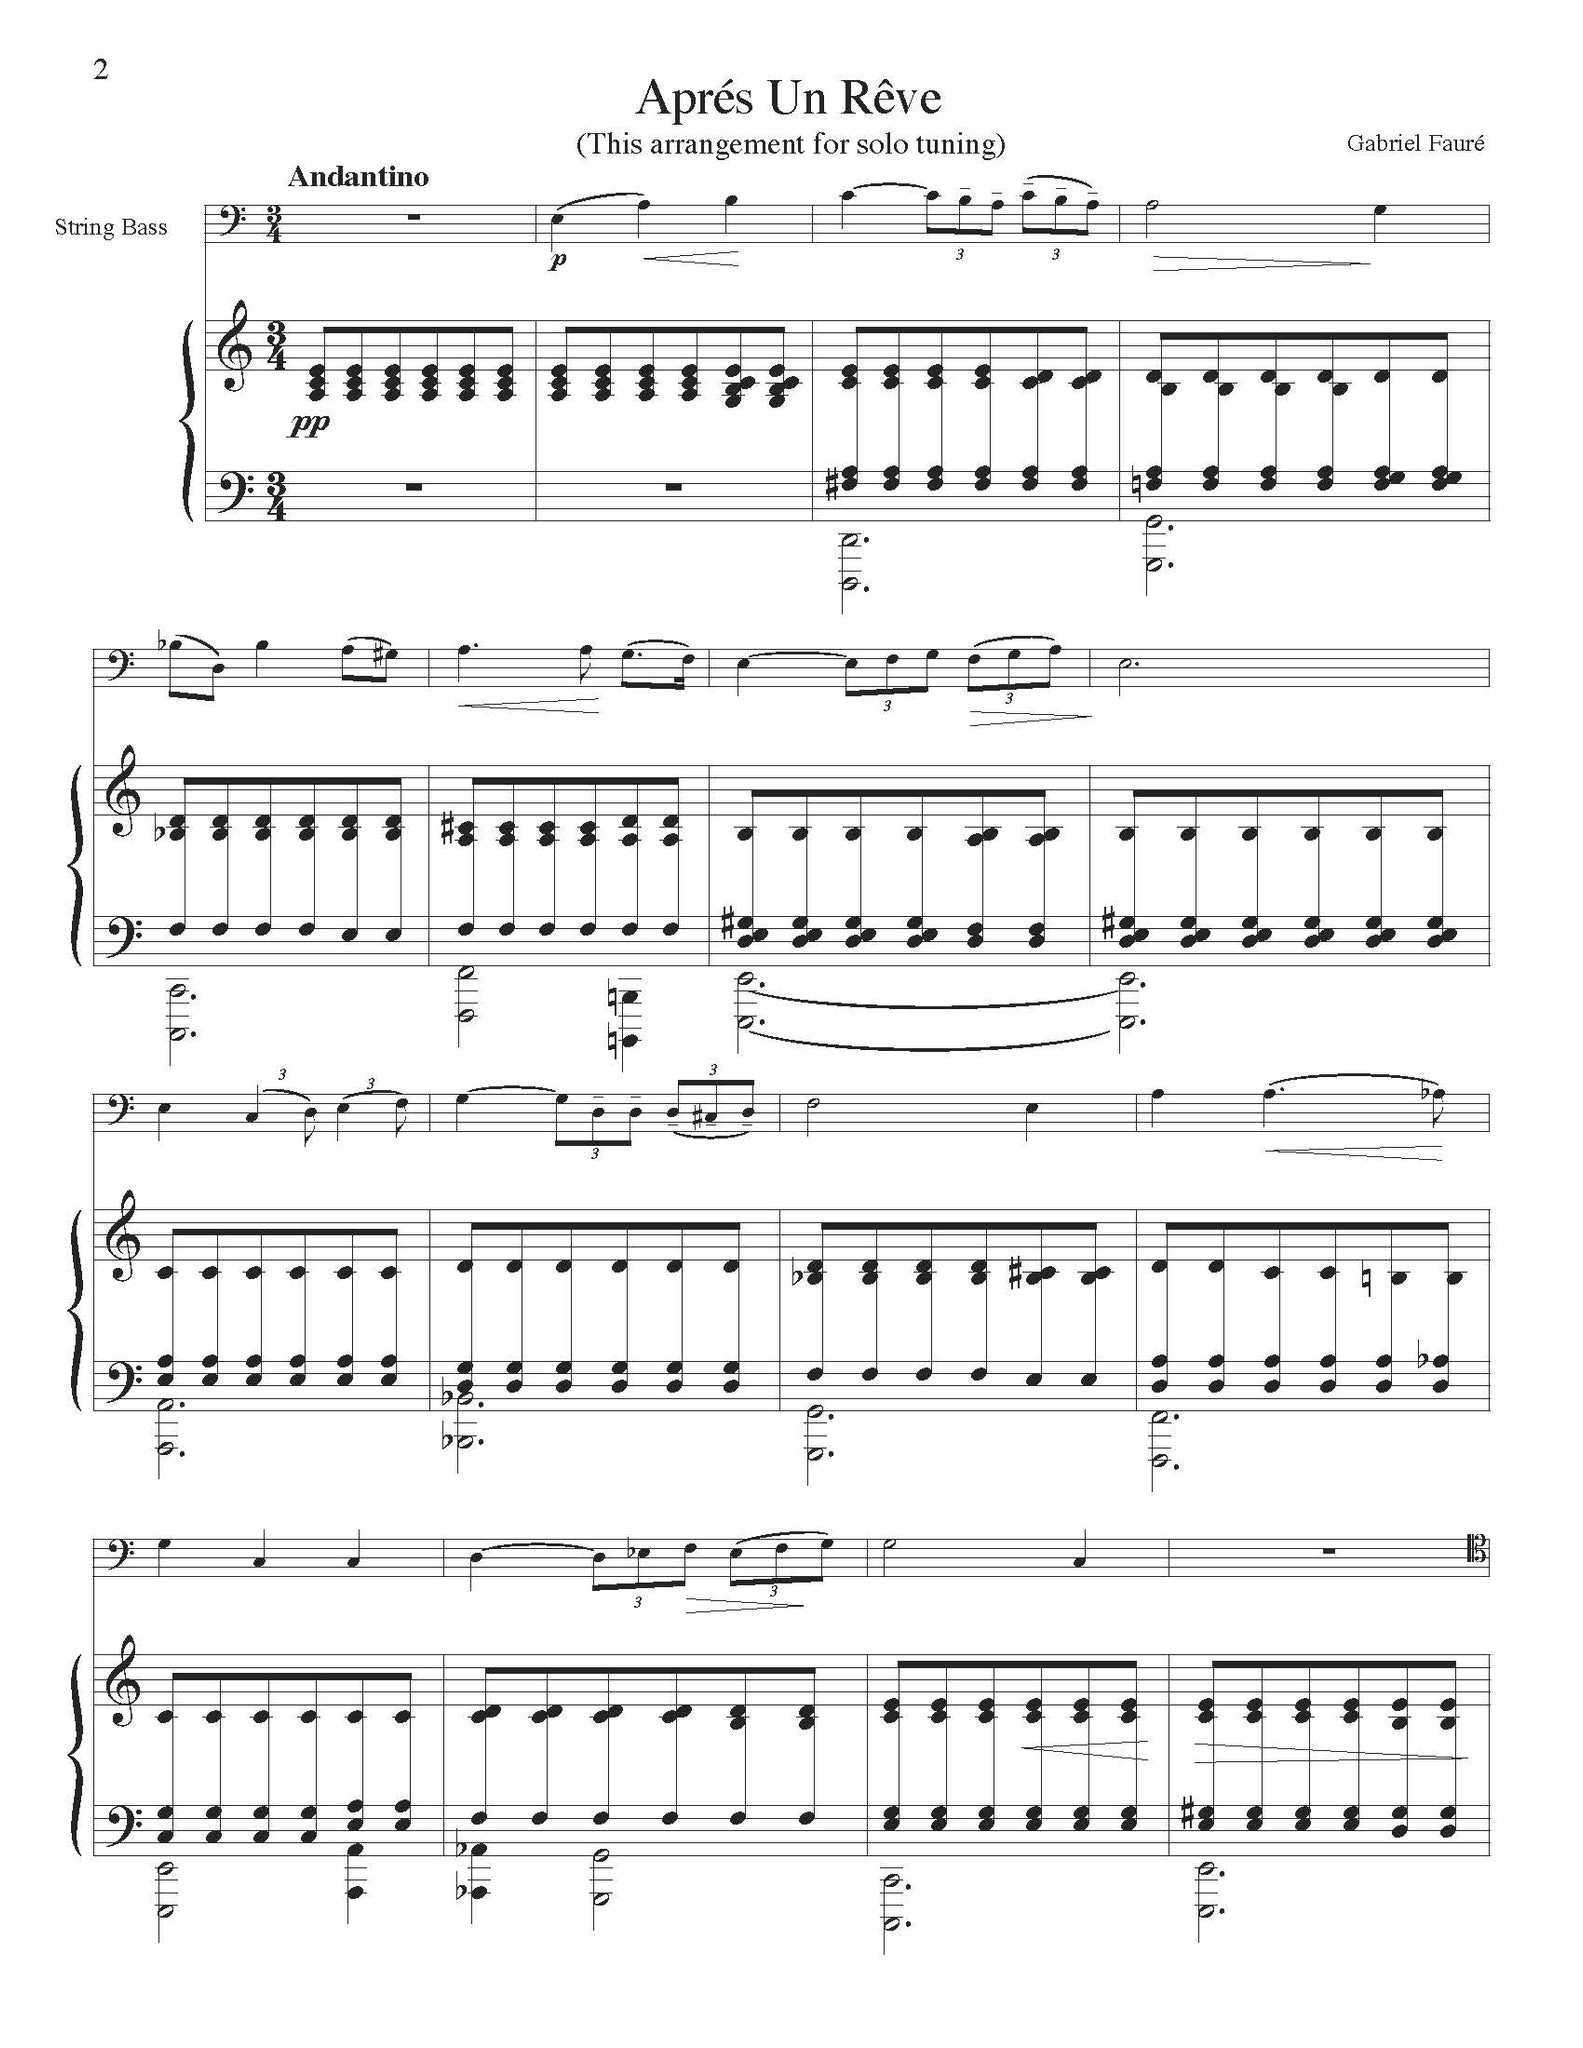 Faure Apres un Reve a minor orchestra tuning page 1